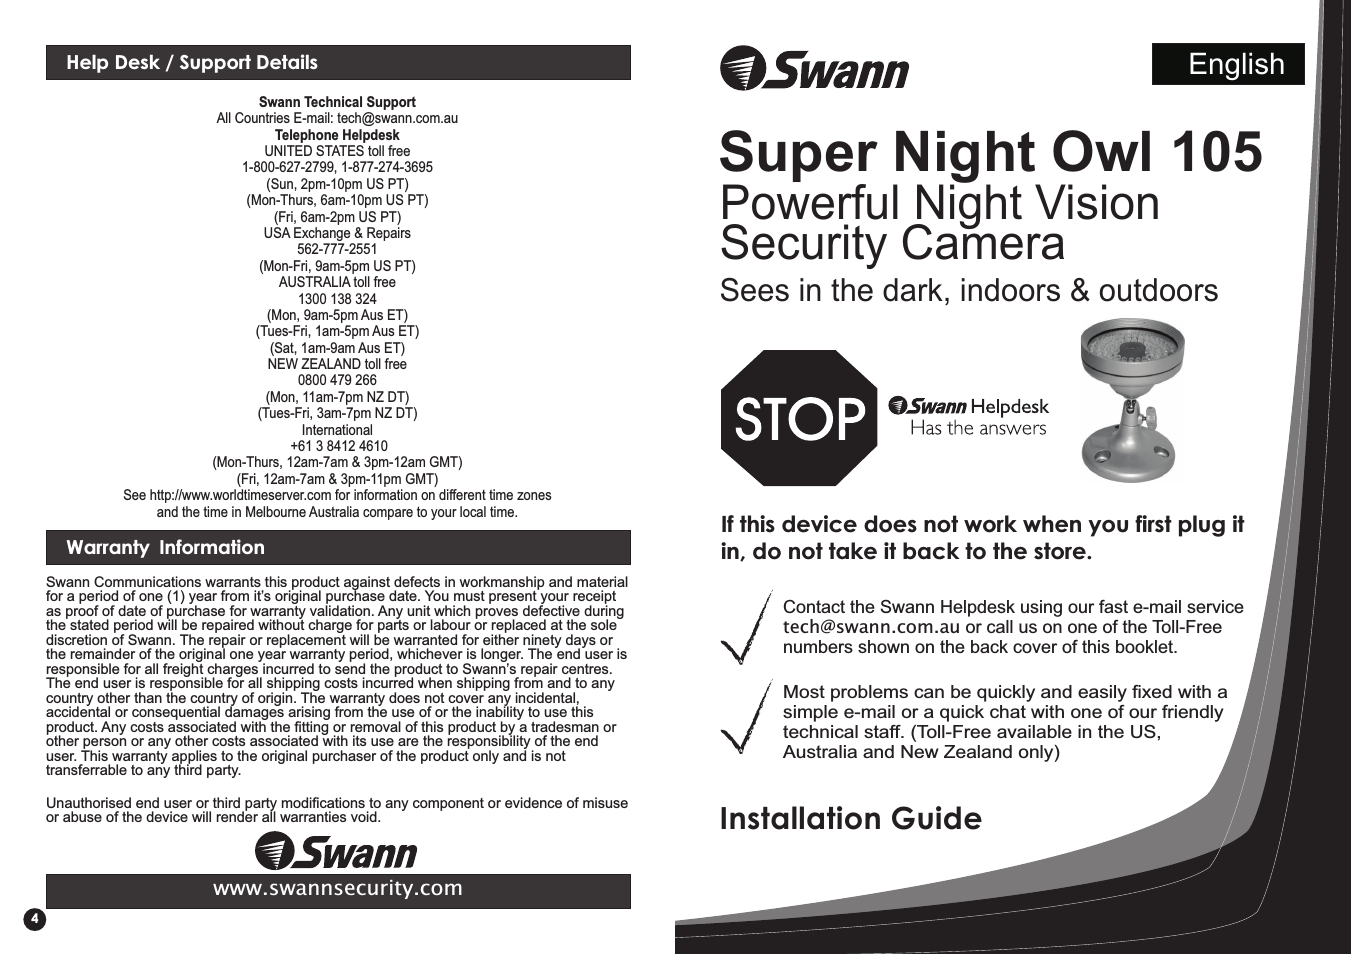 SUPER NIGHT OWL 105